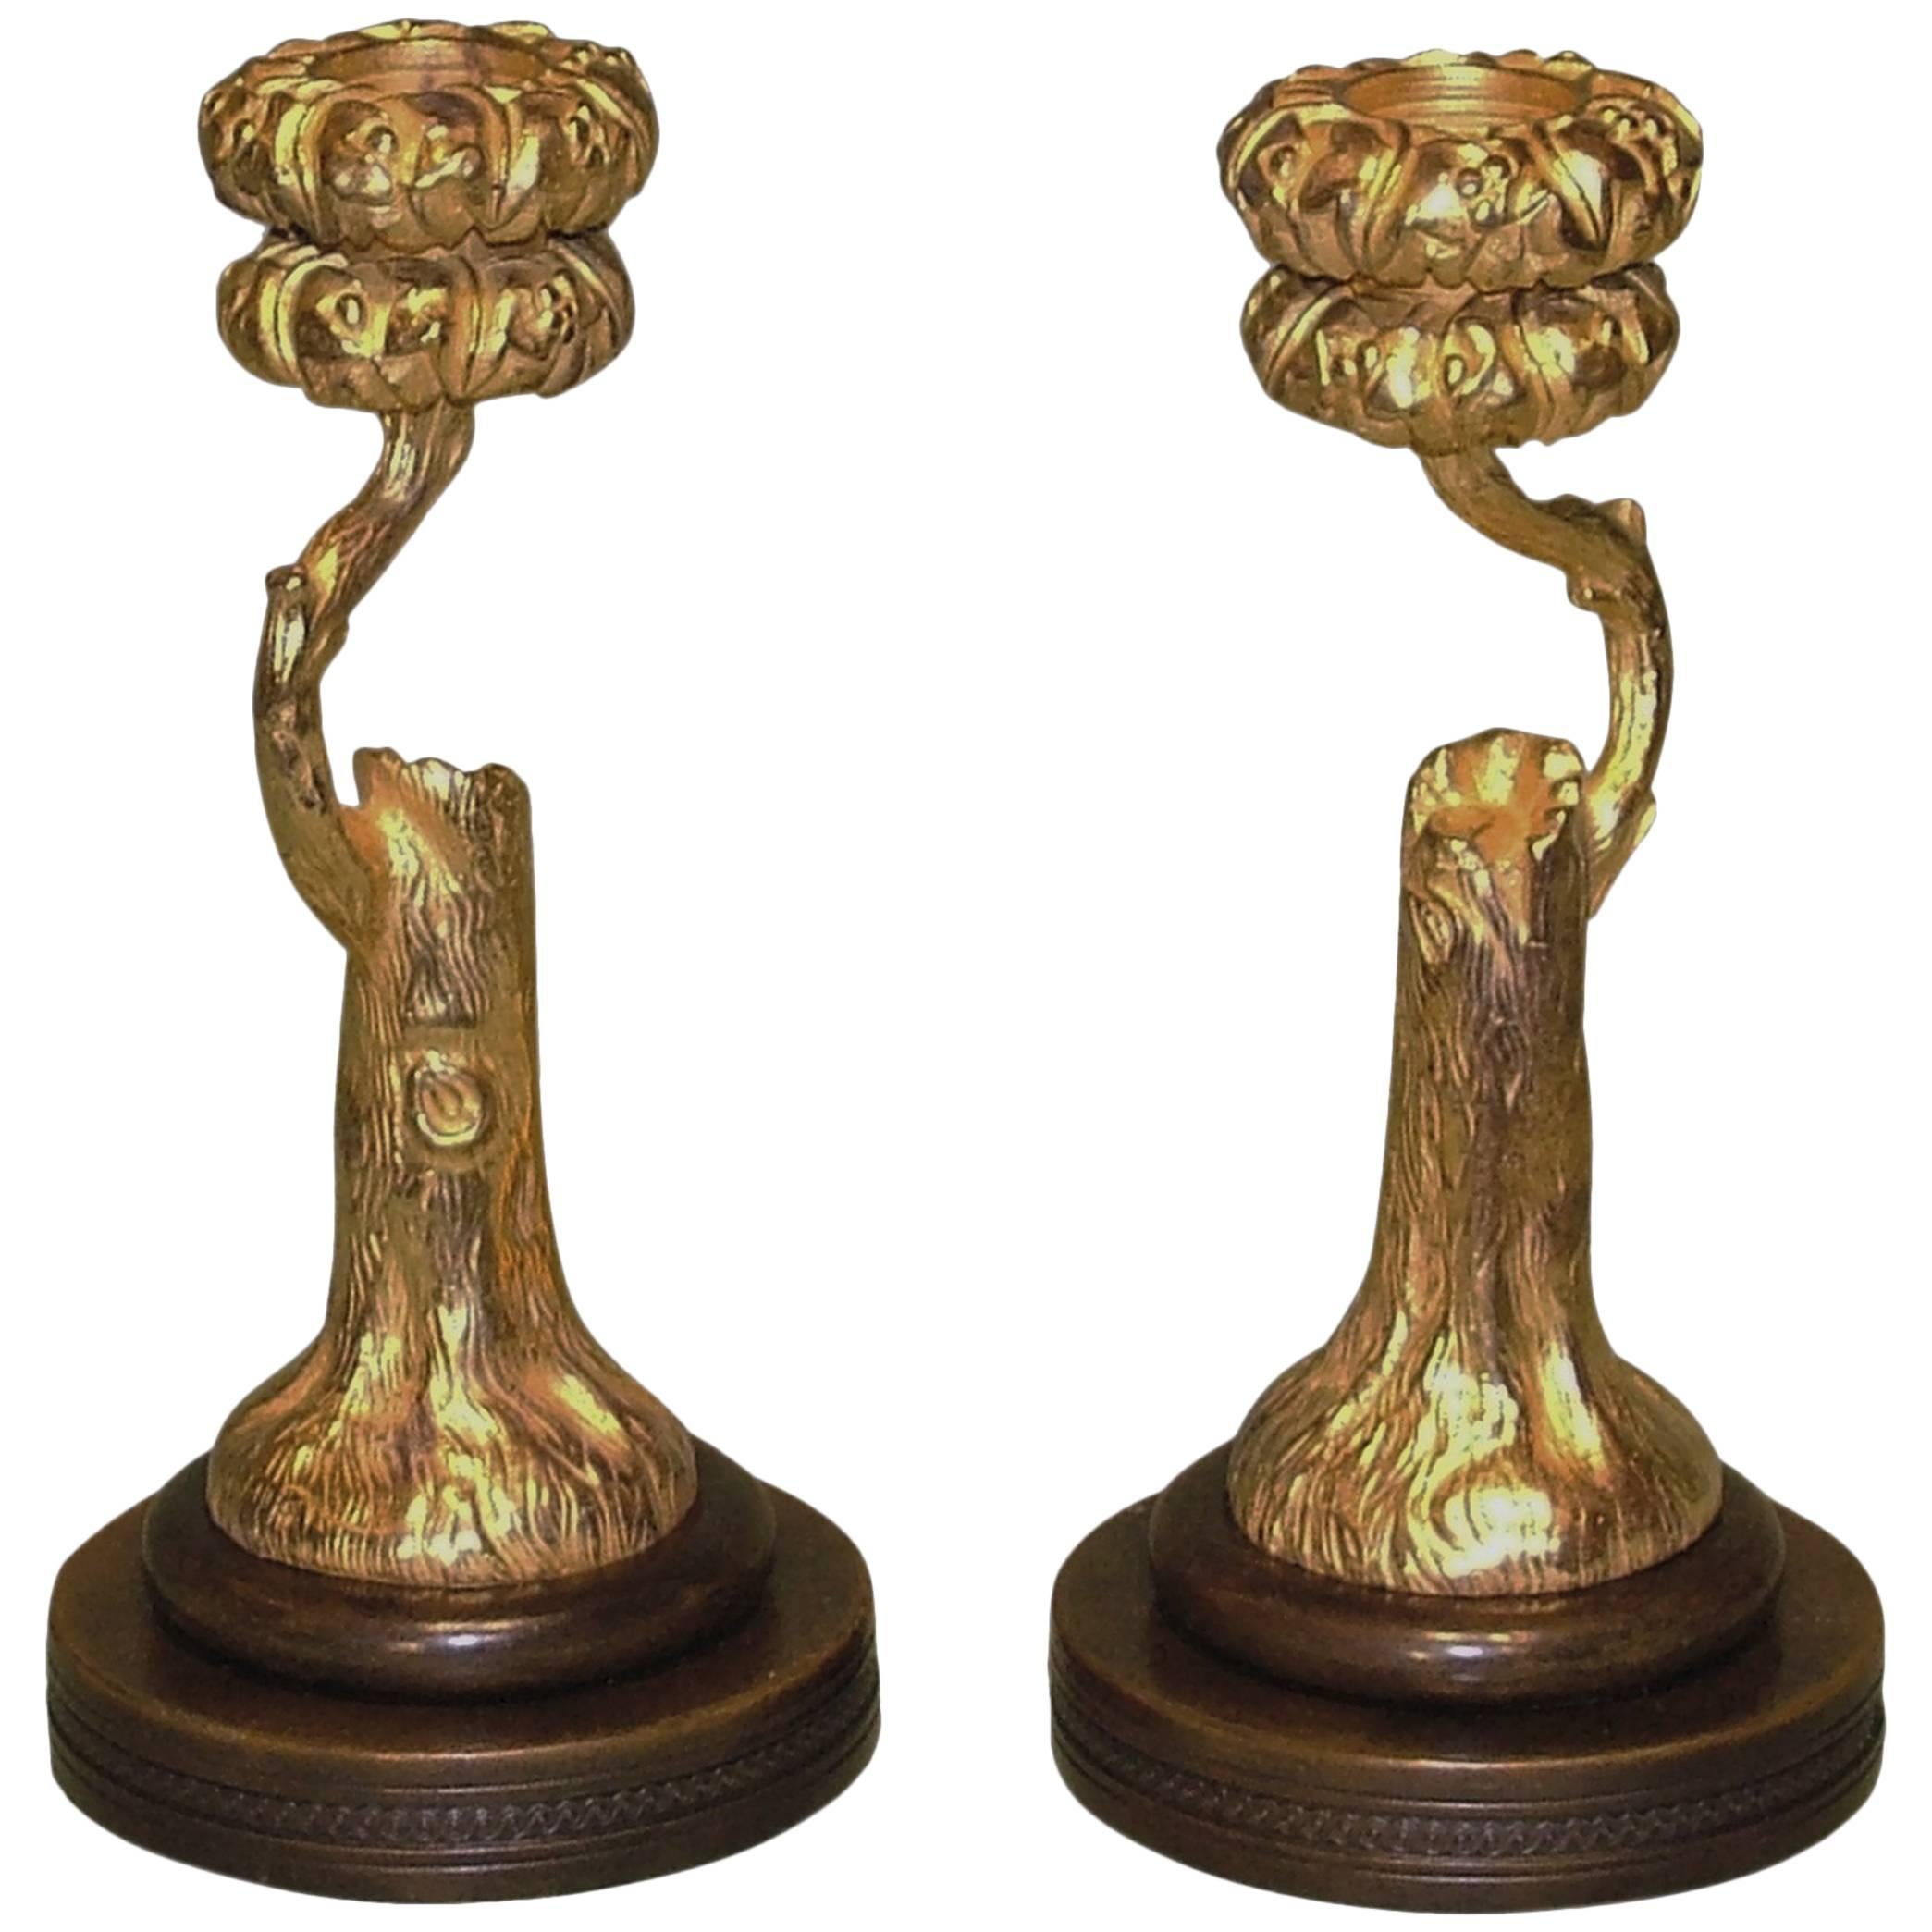 Unusual Pair of Mid-19th Century Bronze and Ormolu Candlesticks